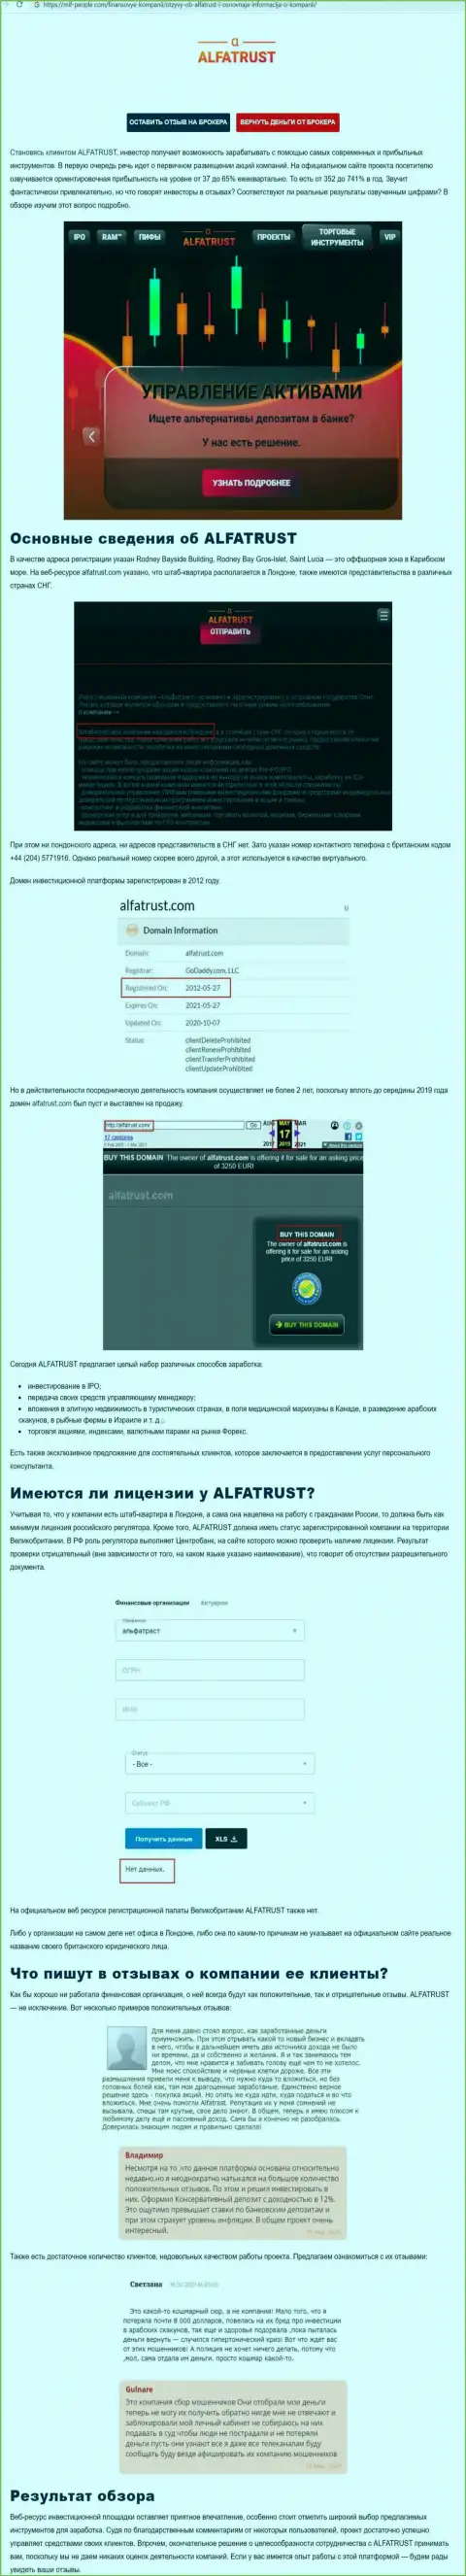 Сайт mif-people com показал материал о ФОРЕКС брокере Alfa Trust